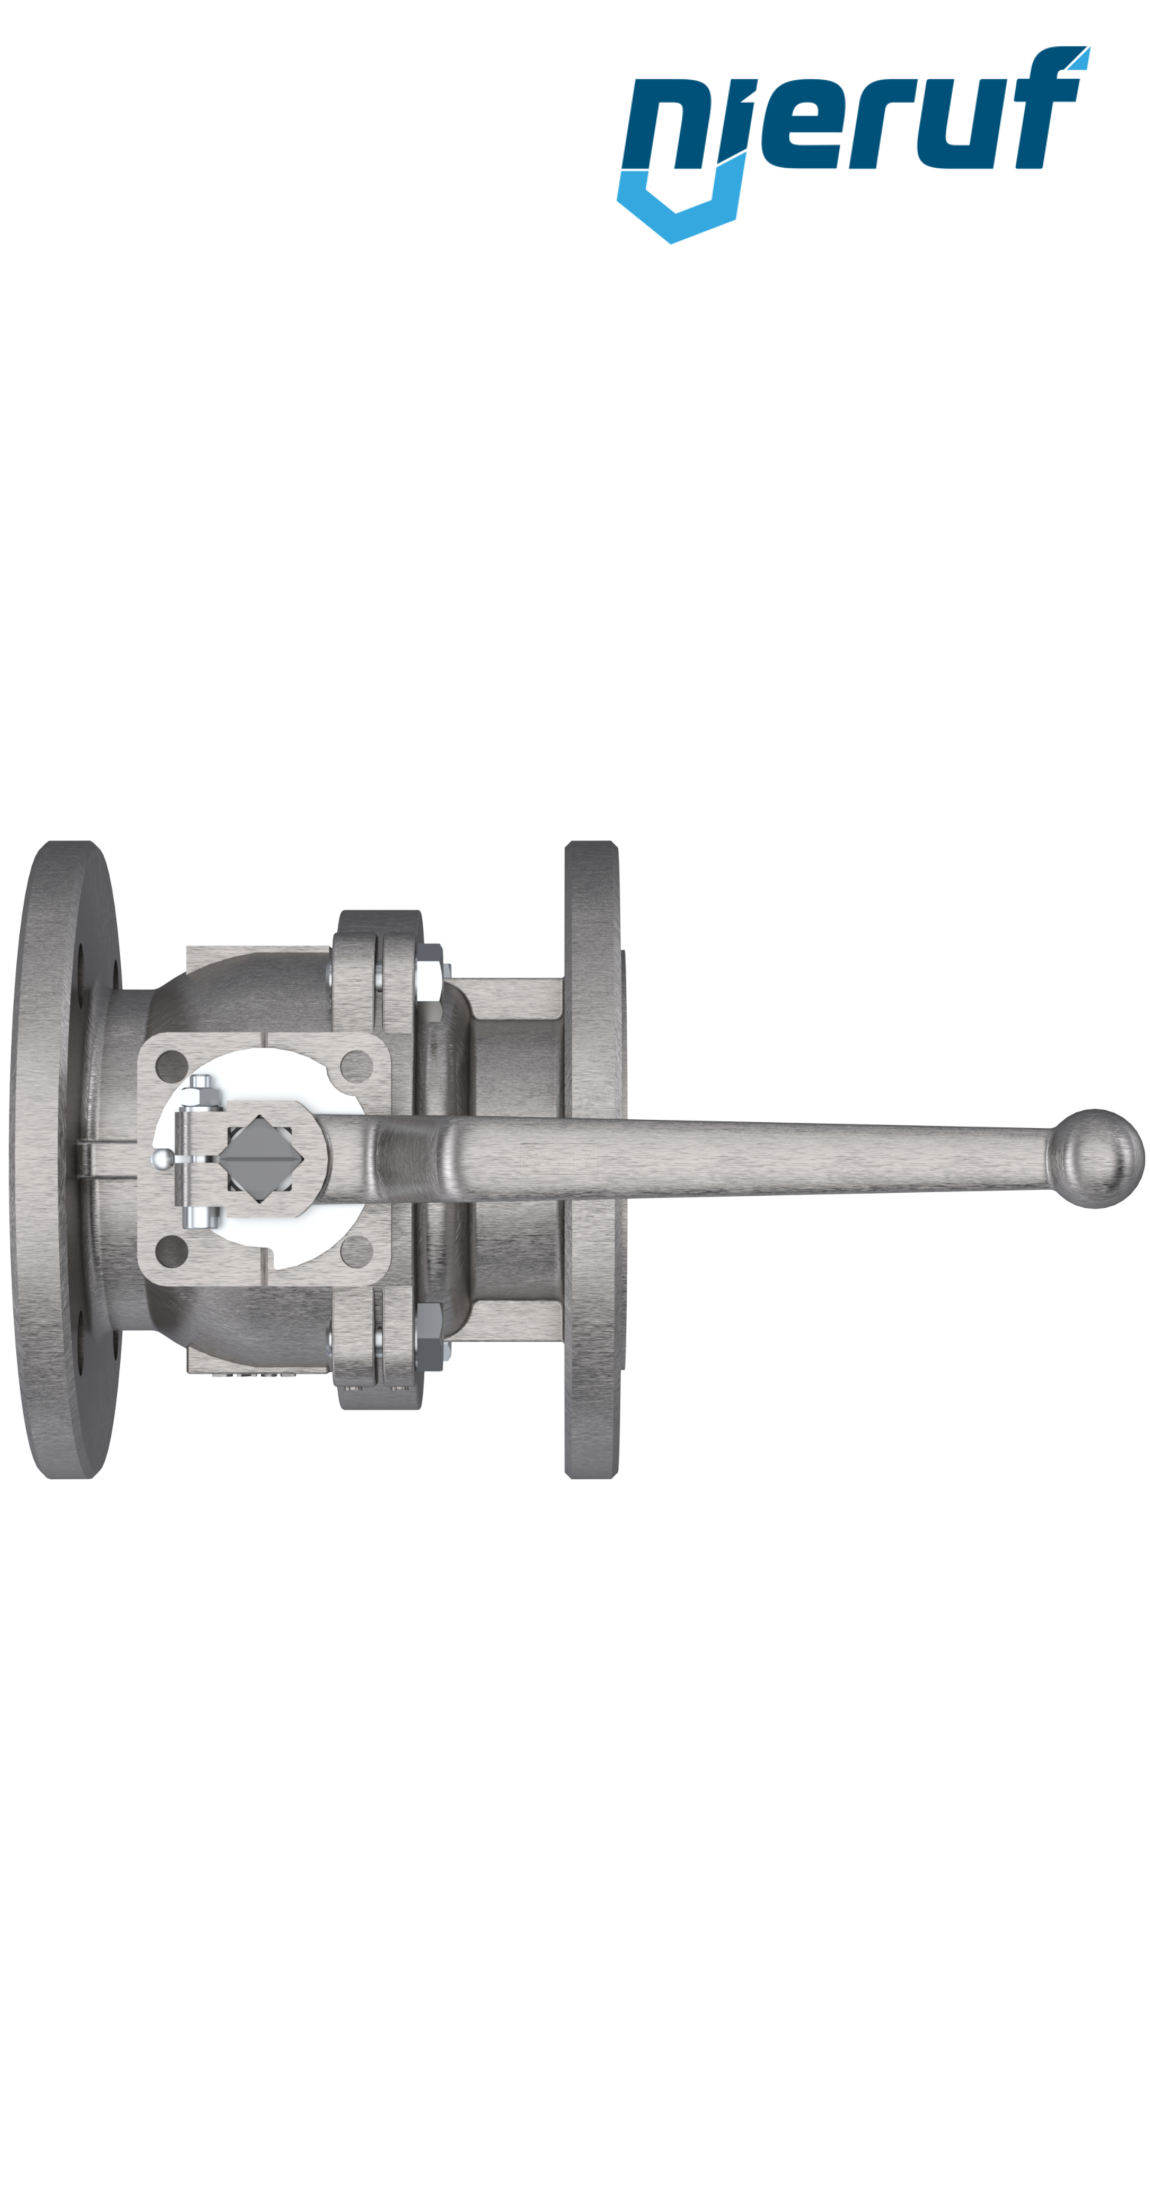 Steam-flange ball valve DN65 FK05 stainless steel 1.4408